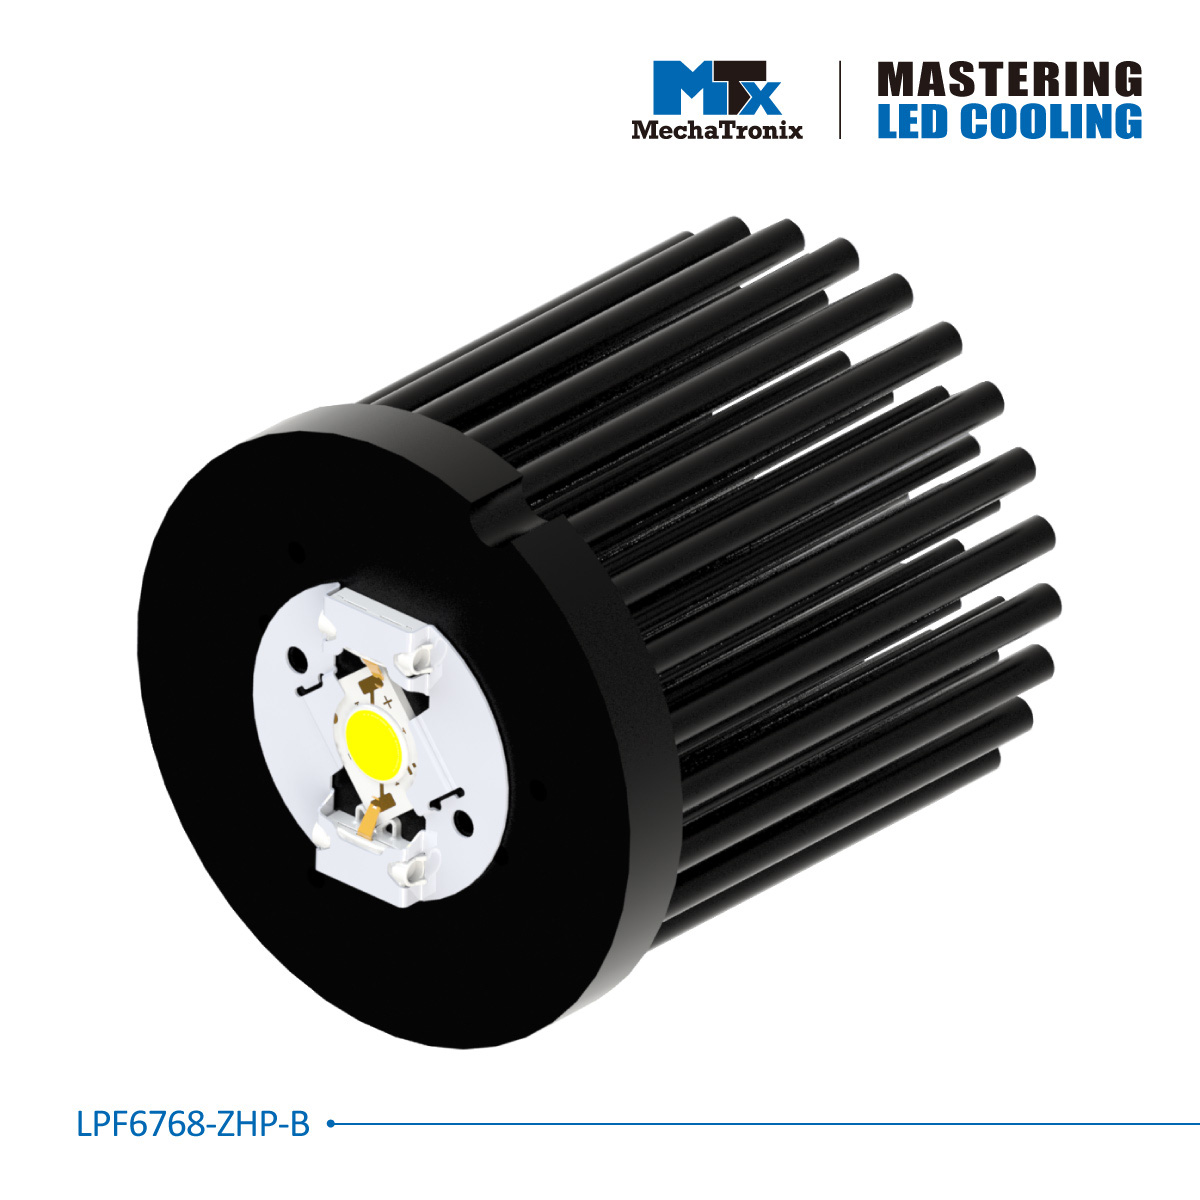 MechaTronix Heat Sink LPF6768-ZHP-B for LED <4600lm